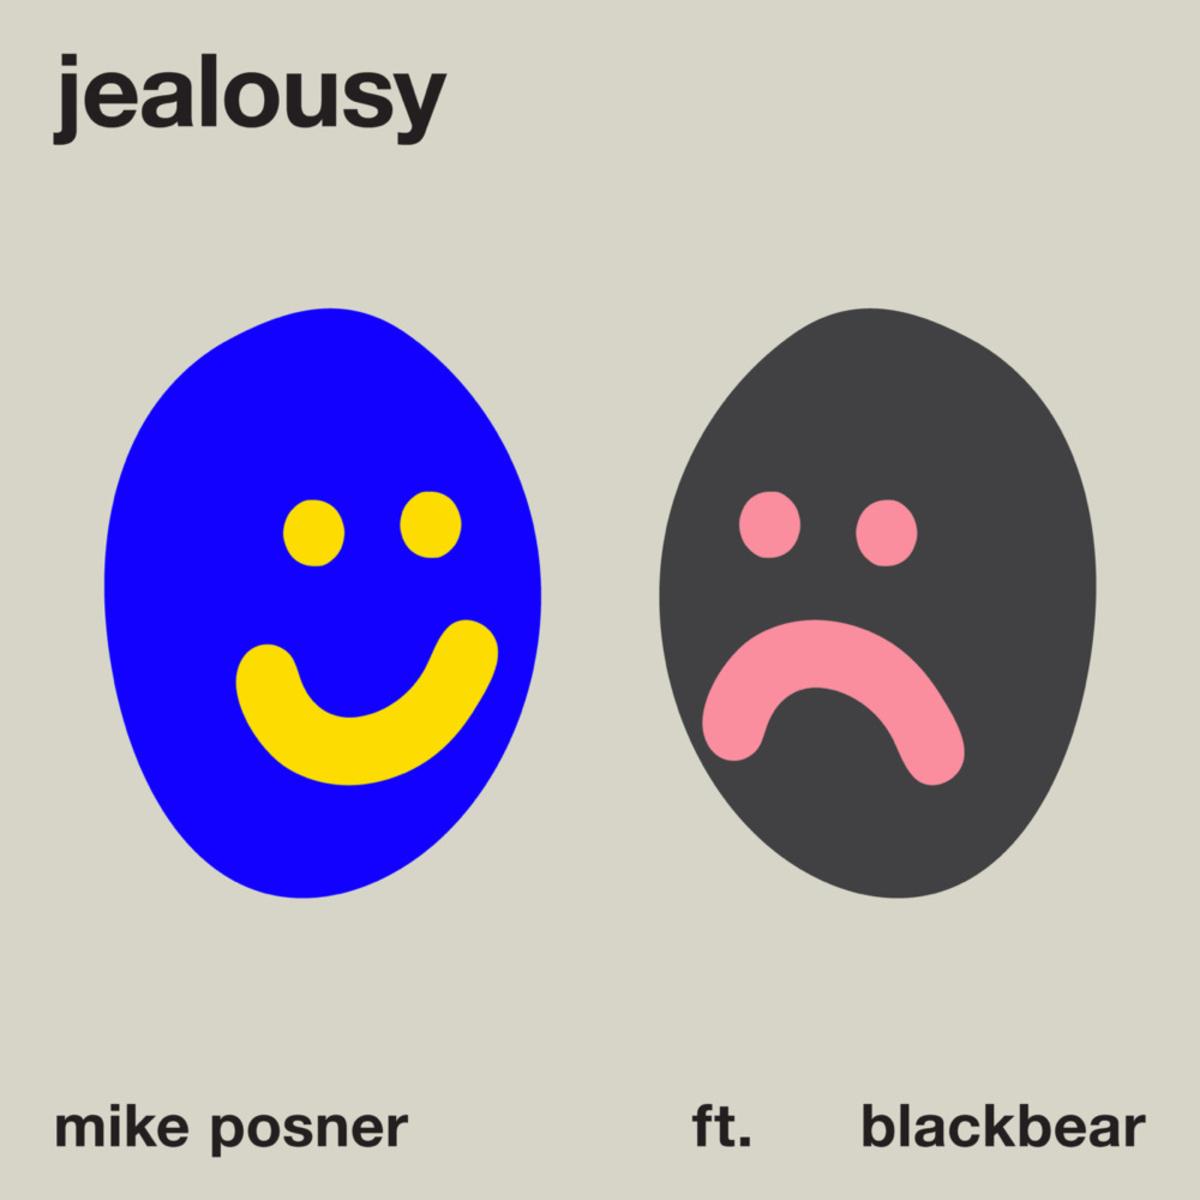 Mike Posner & blackbear Connect For “Jealousy”